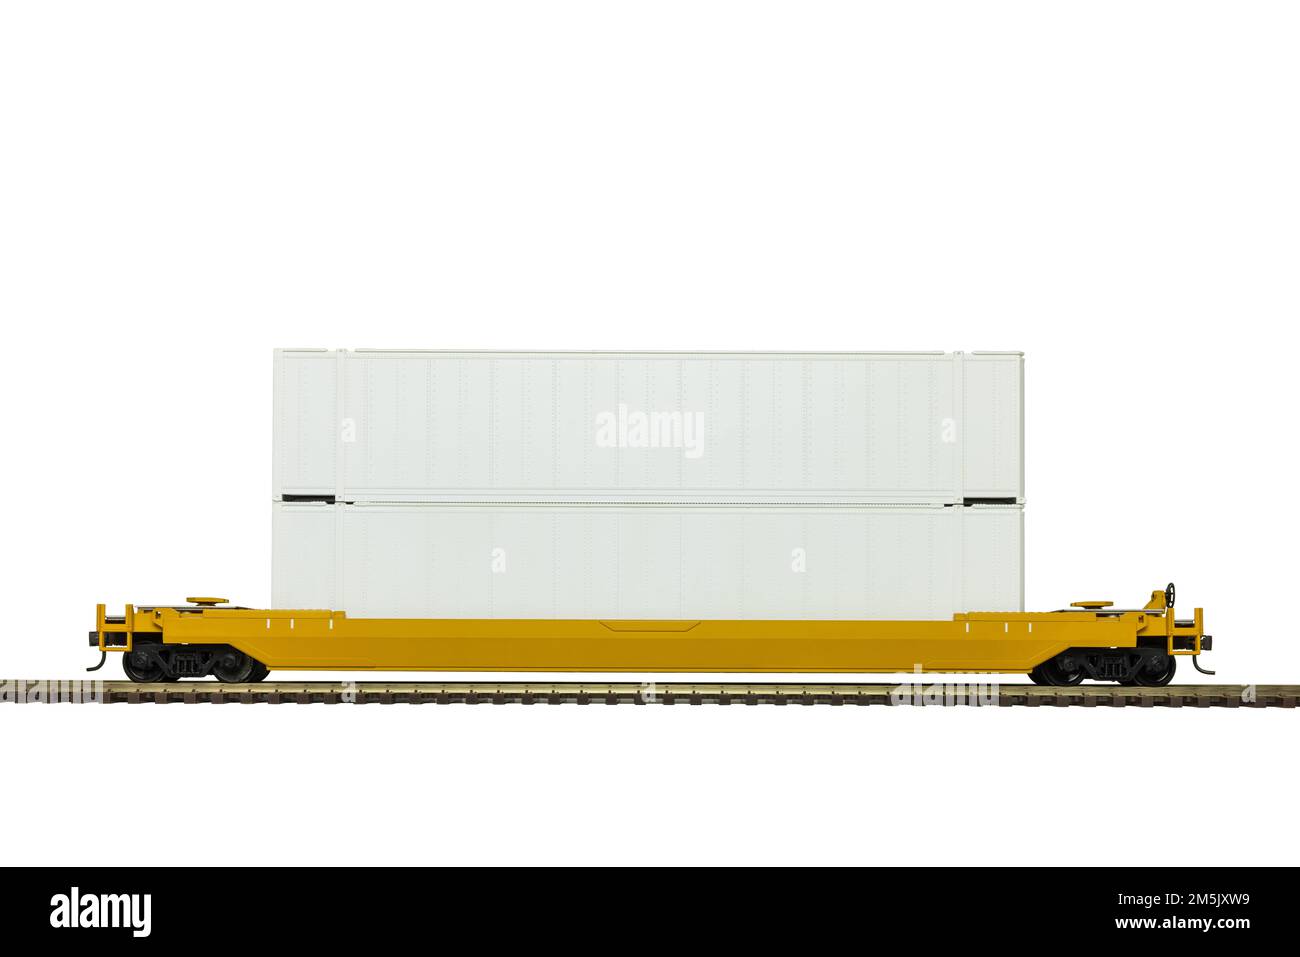 A yellow double stack intermodal railroad car on track. Stock Photo